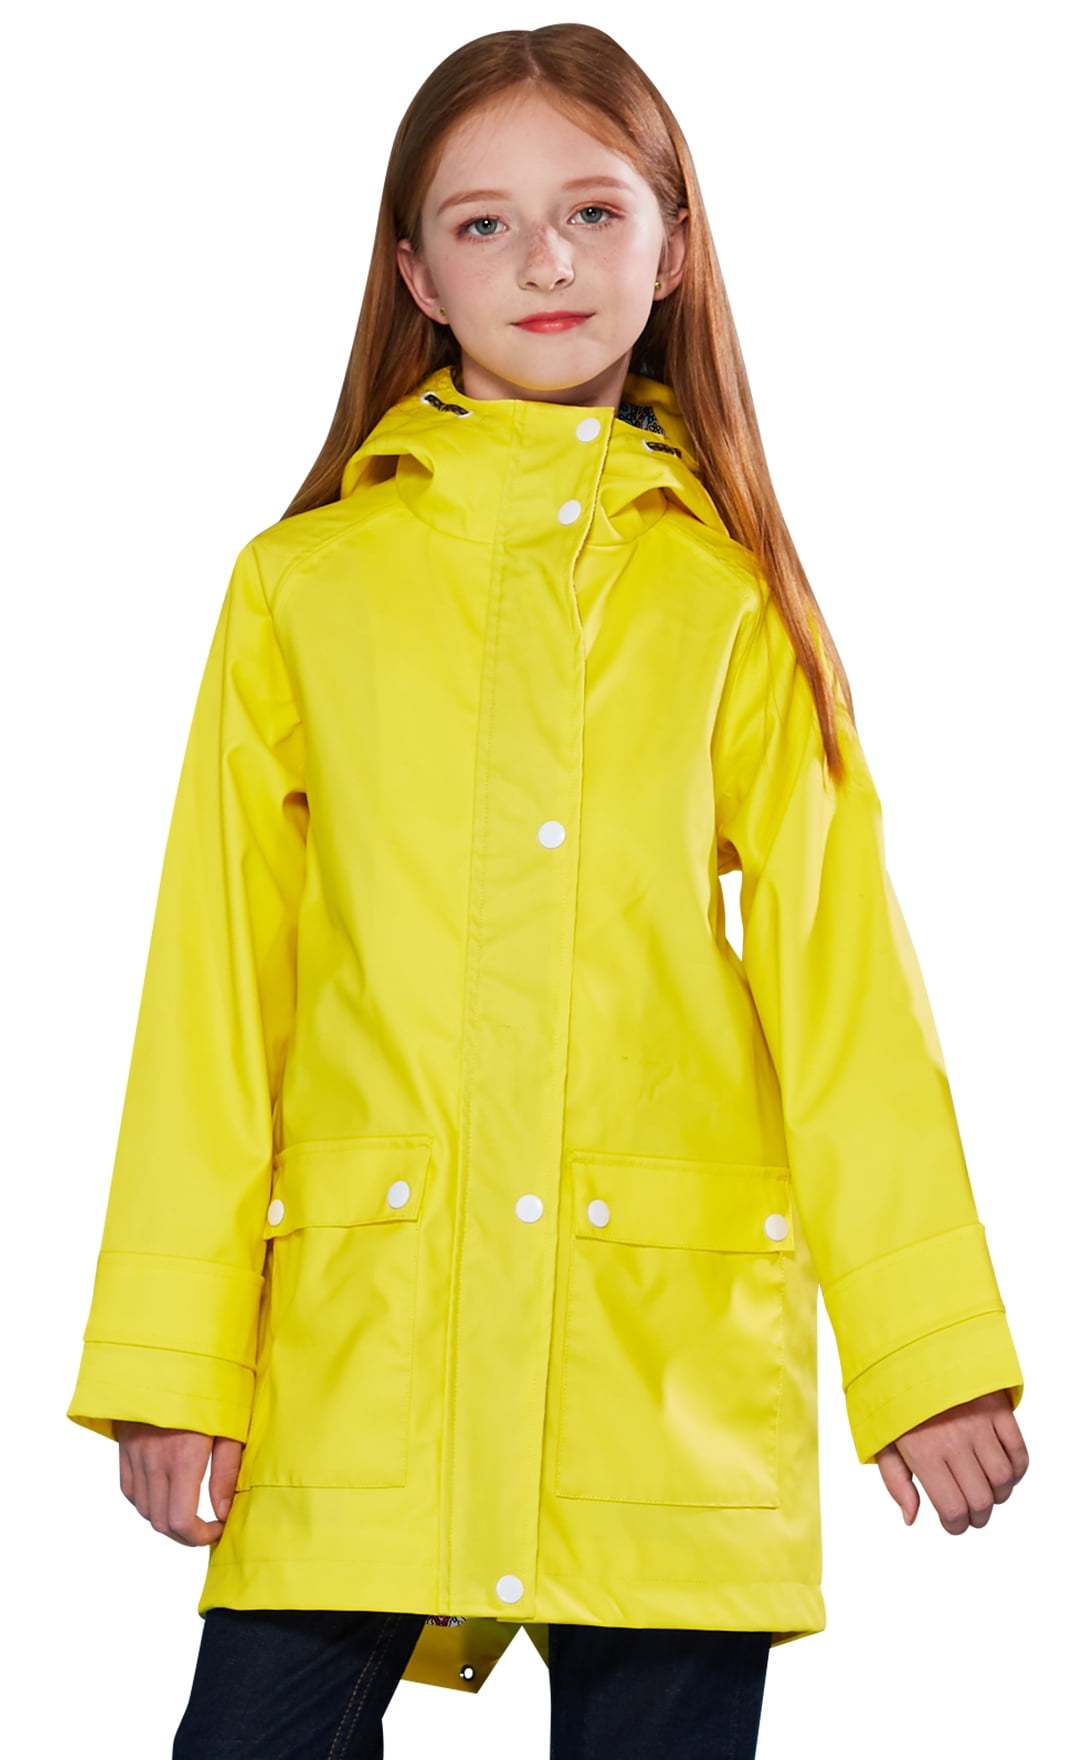 Waterproof Kids Rain Coat For Children Raincoat Rainwear Rain Suit Kids Boy Girl